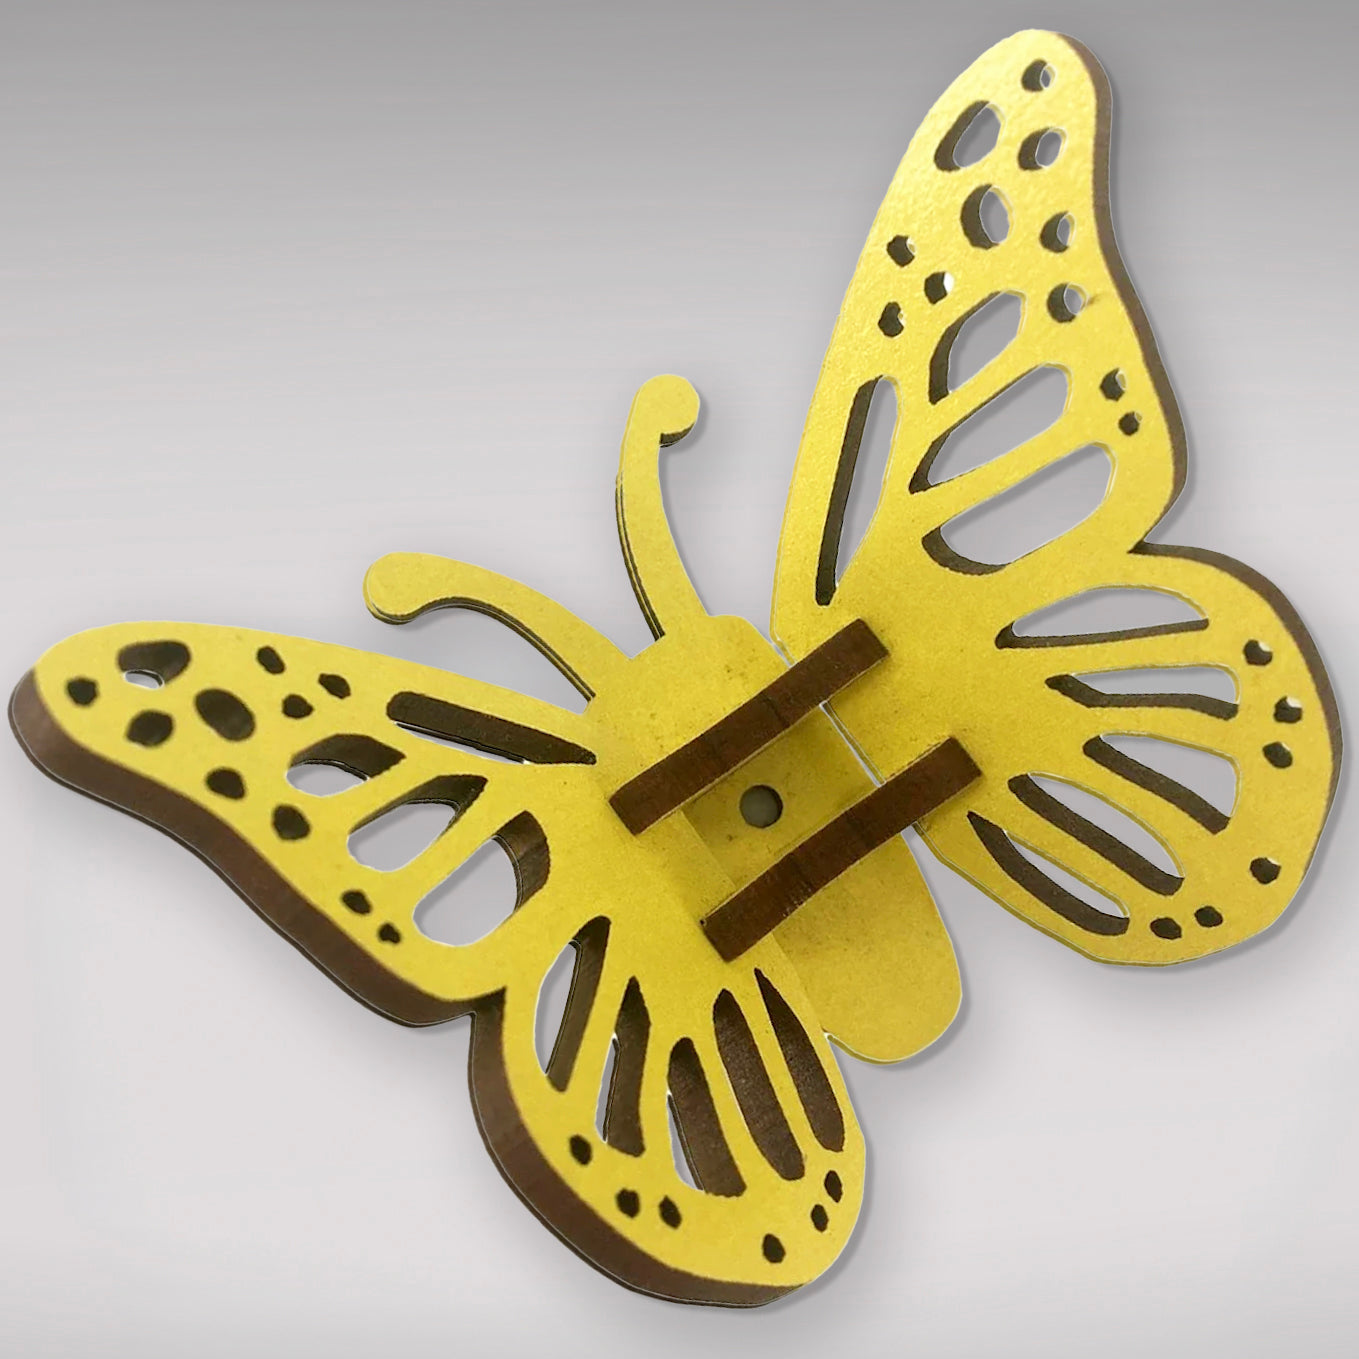 Flat-pack Kitset Wooden Model - Mini Butterfly - Yellow